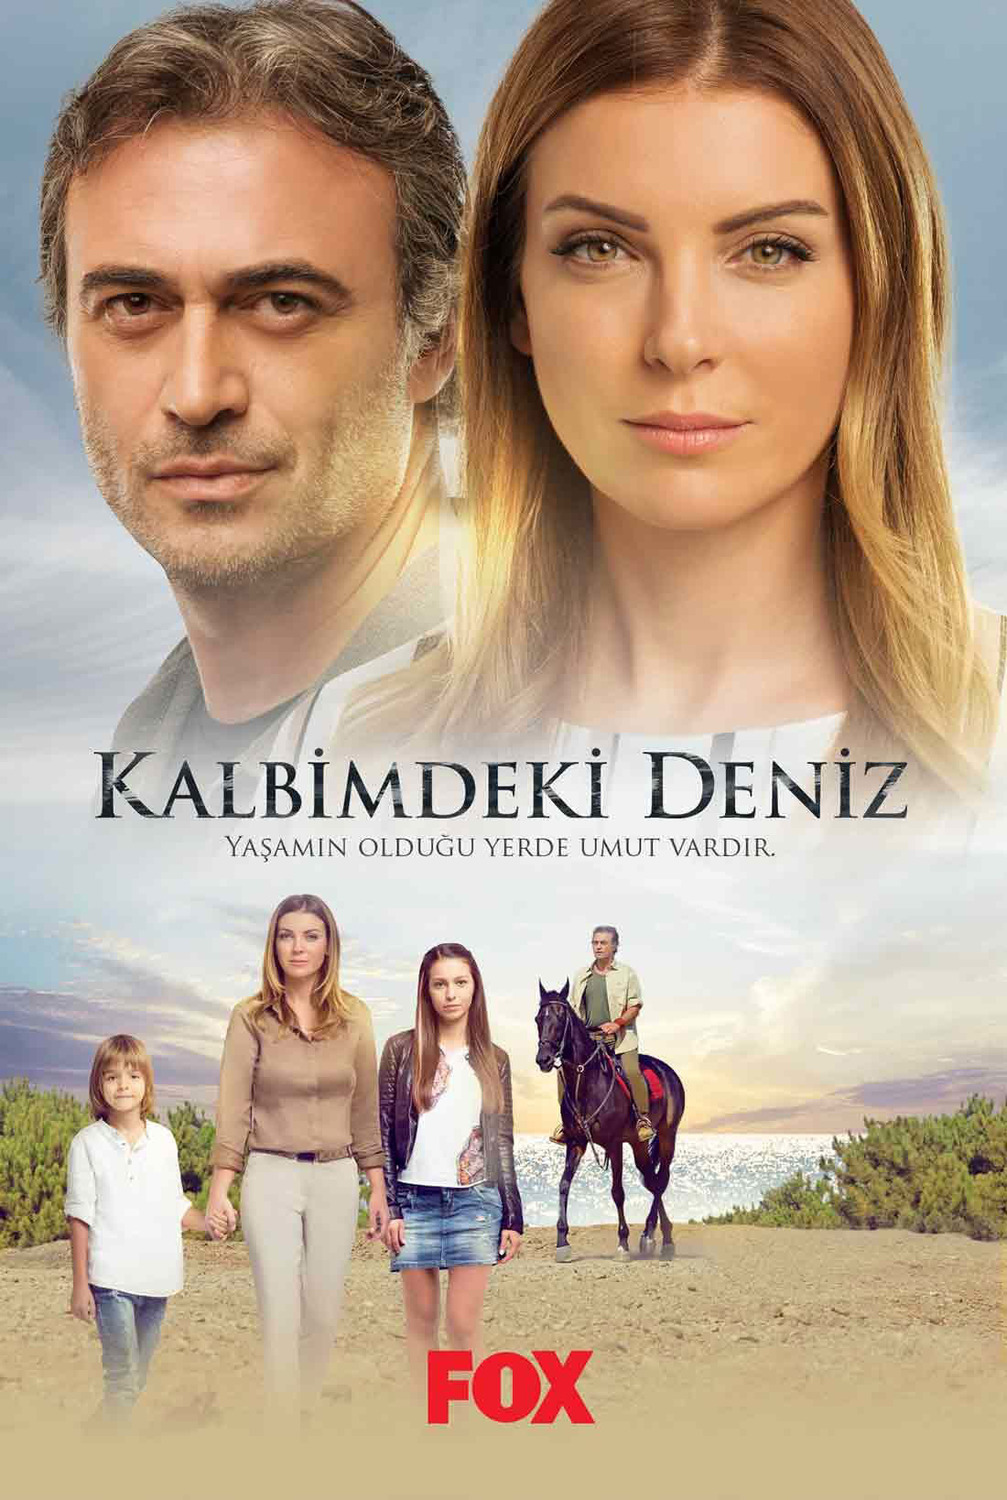 Extra Large TV Poster Image for Kalbimdeki Deniz (#3 of 3)